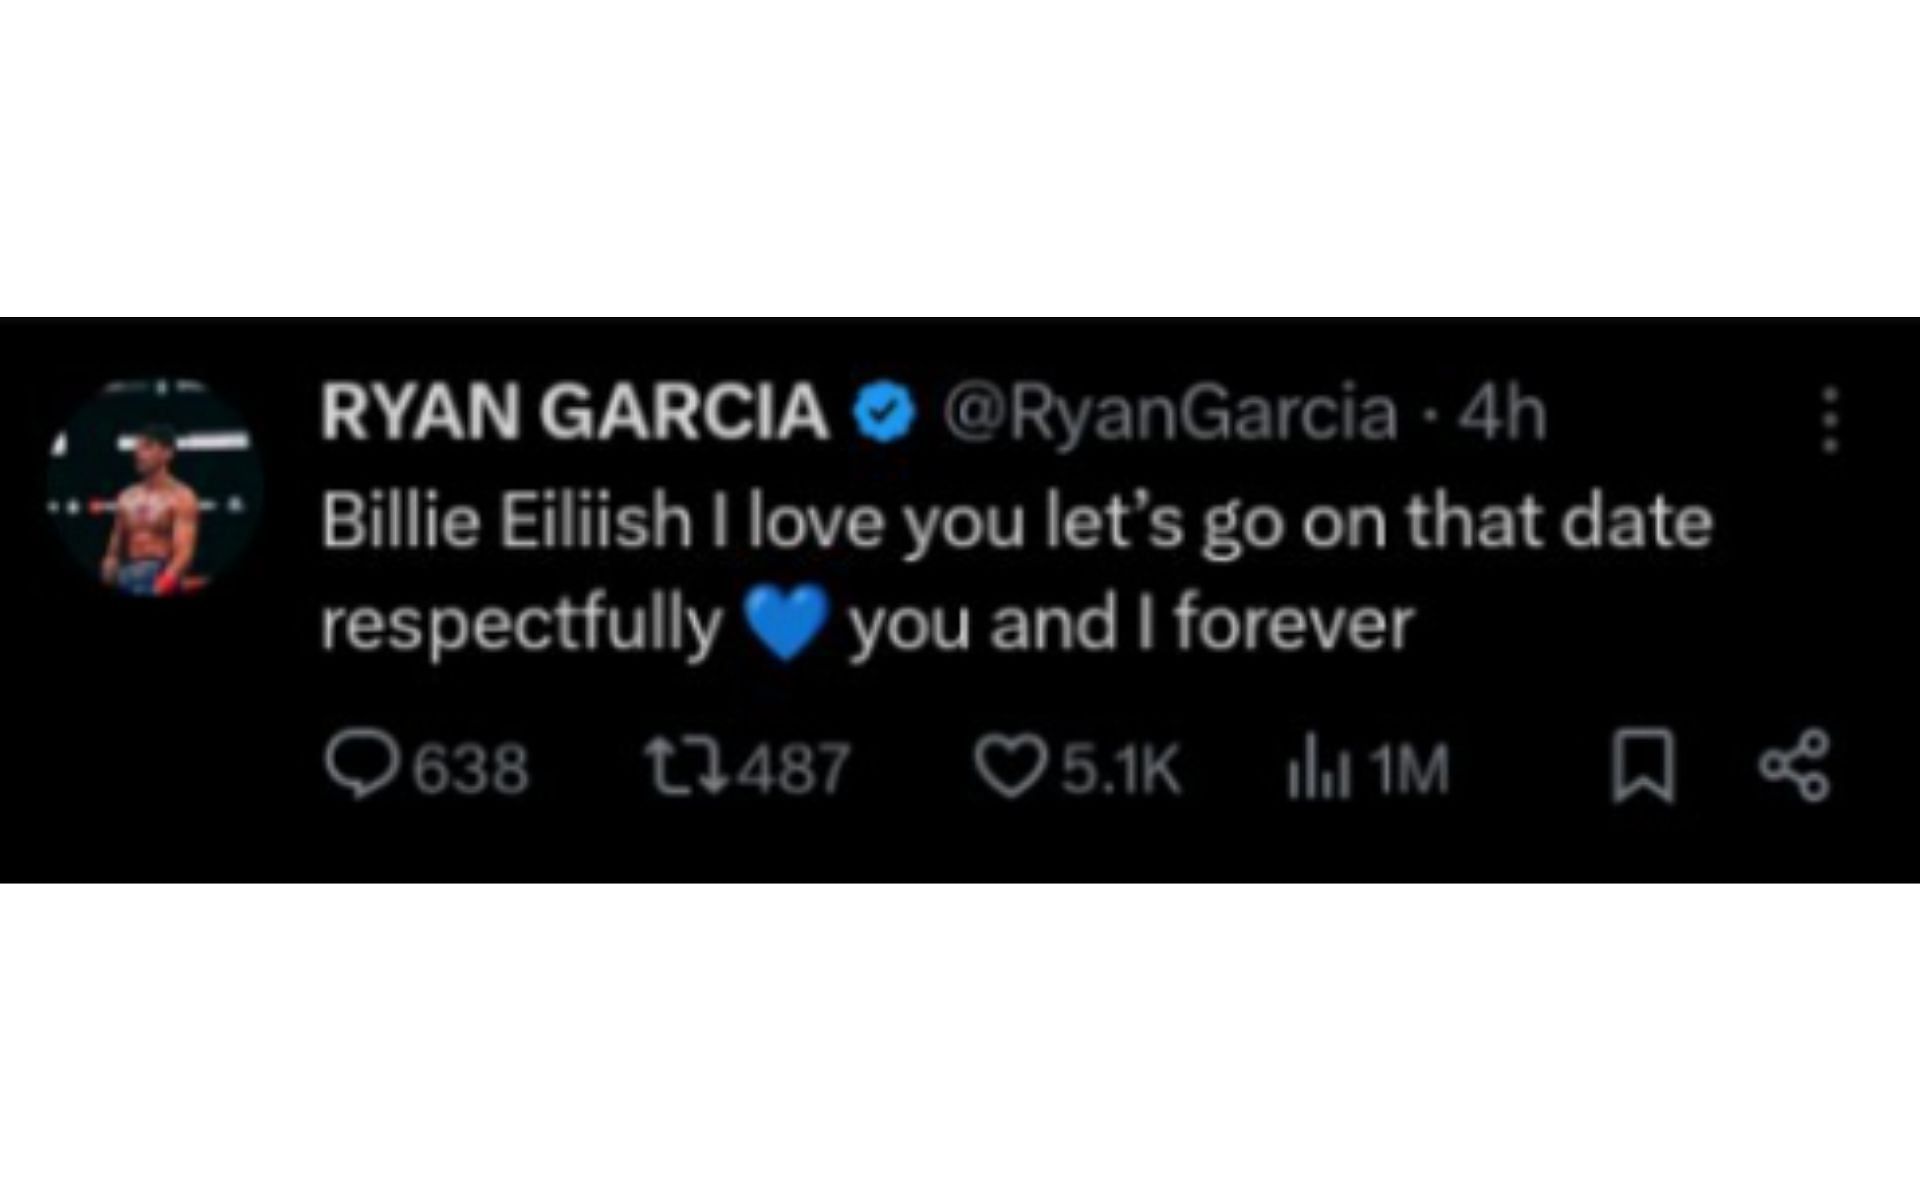 Ryan Garcia&#039;s deleted tweet about Billie Eilish [Image credits: @RyanGarcia on Twitter]